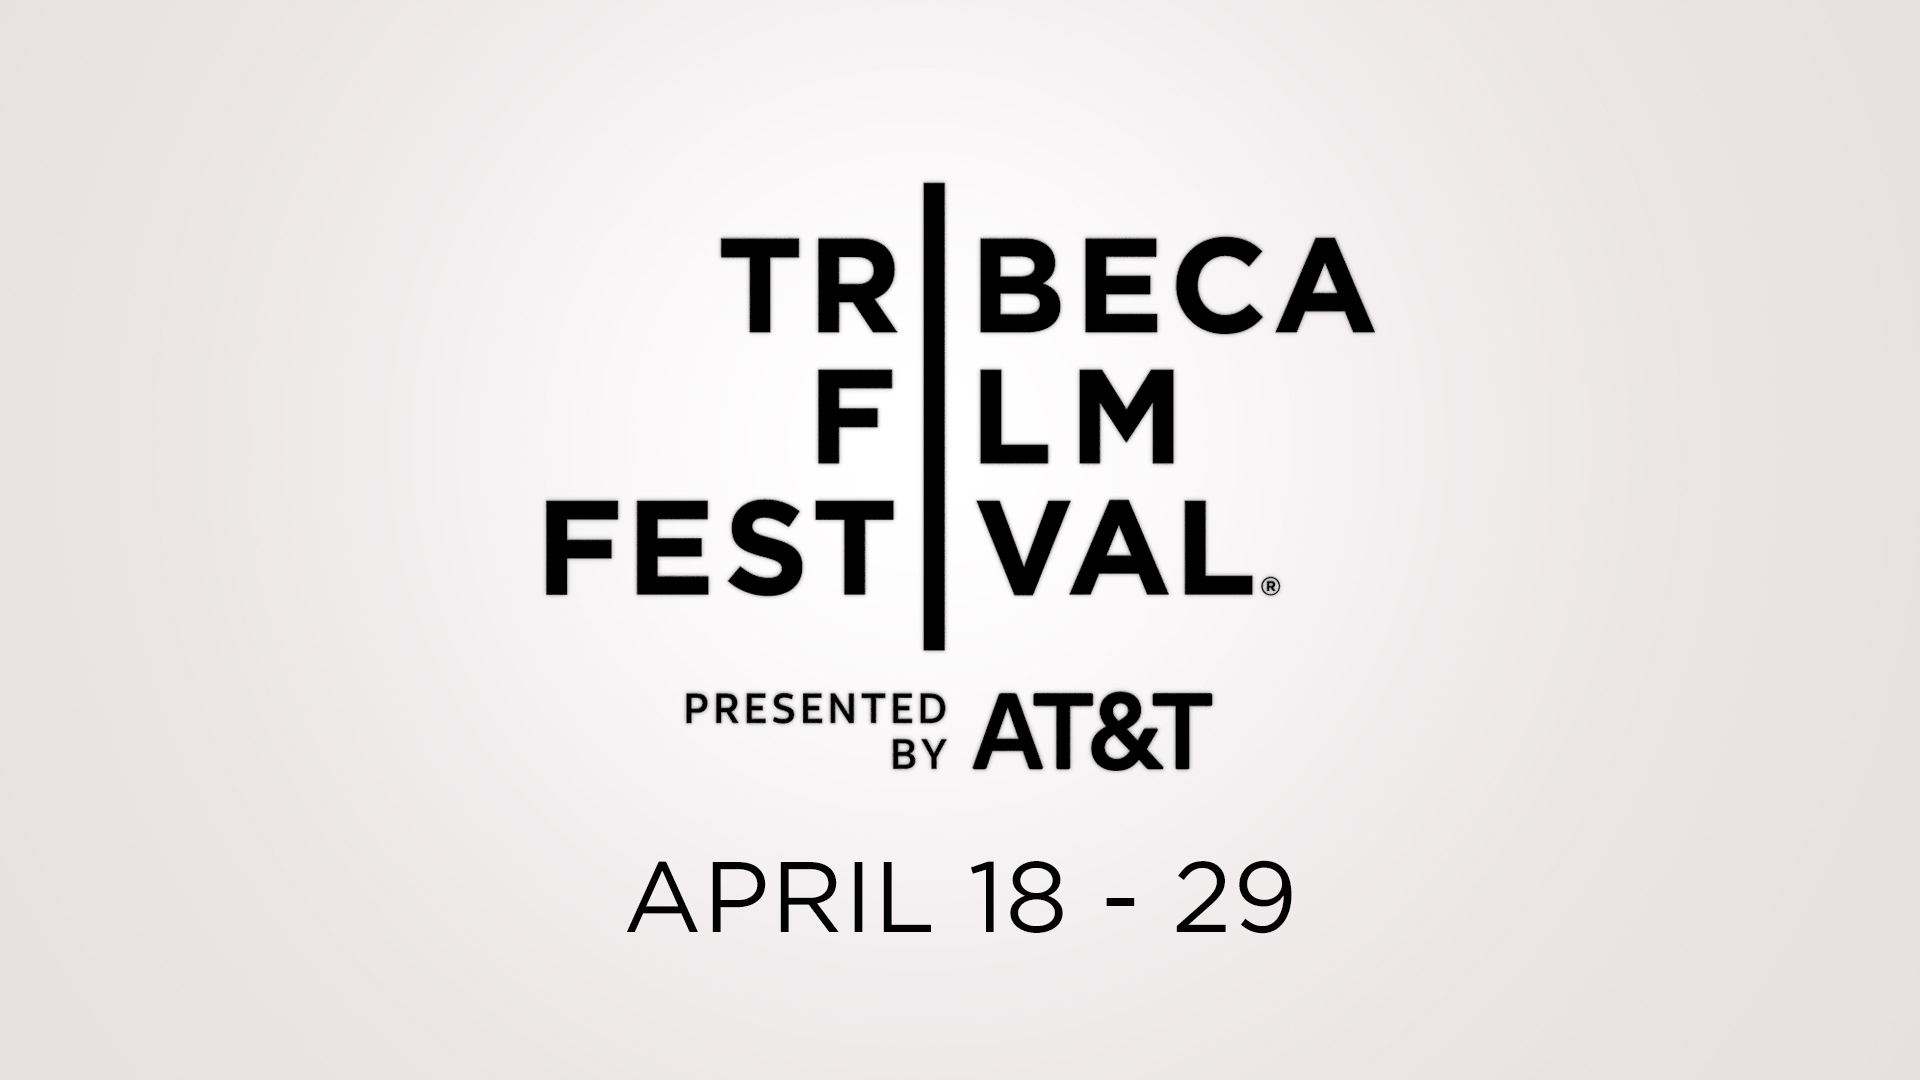 Tribeca Film Festival 2018 dates. Photo provided.